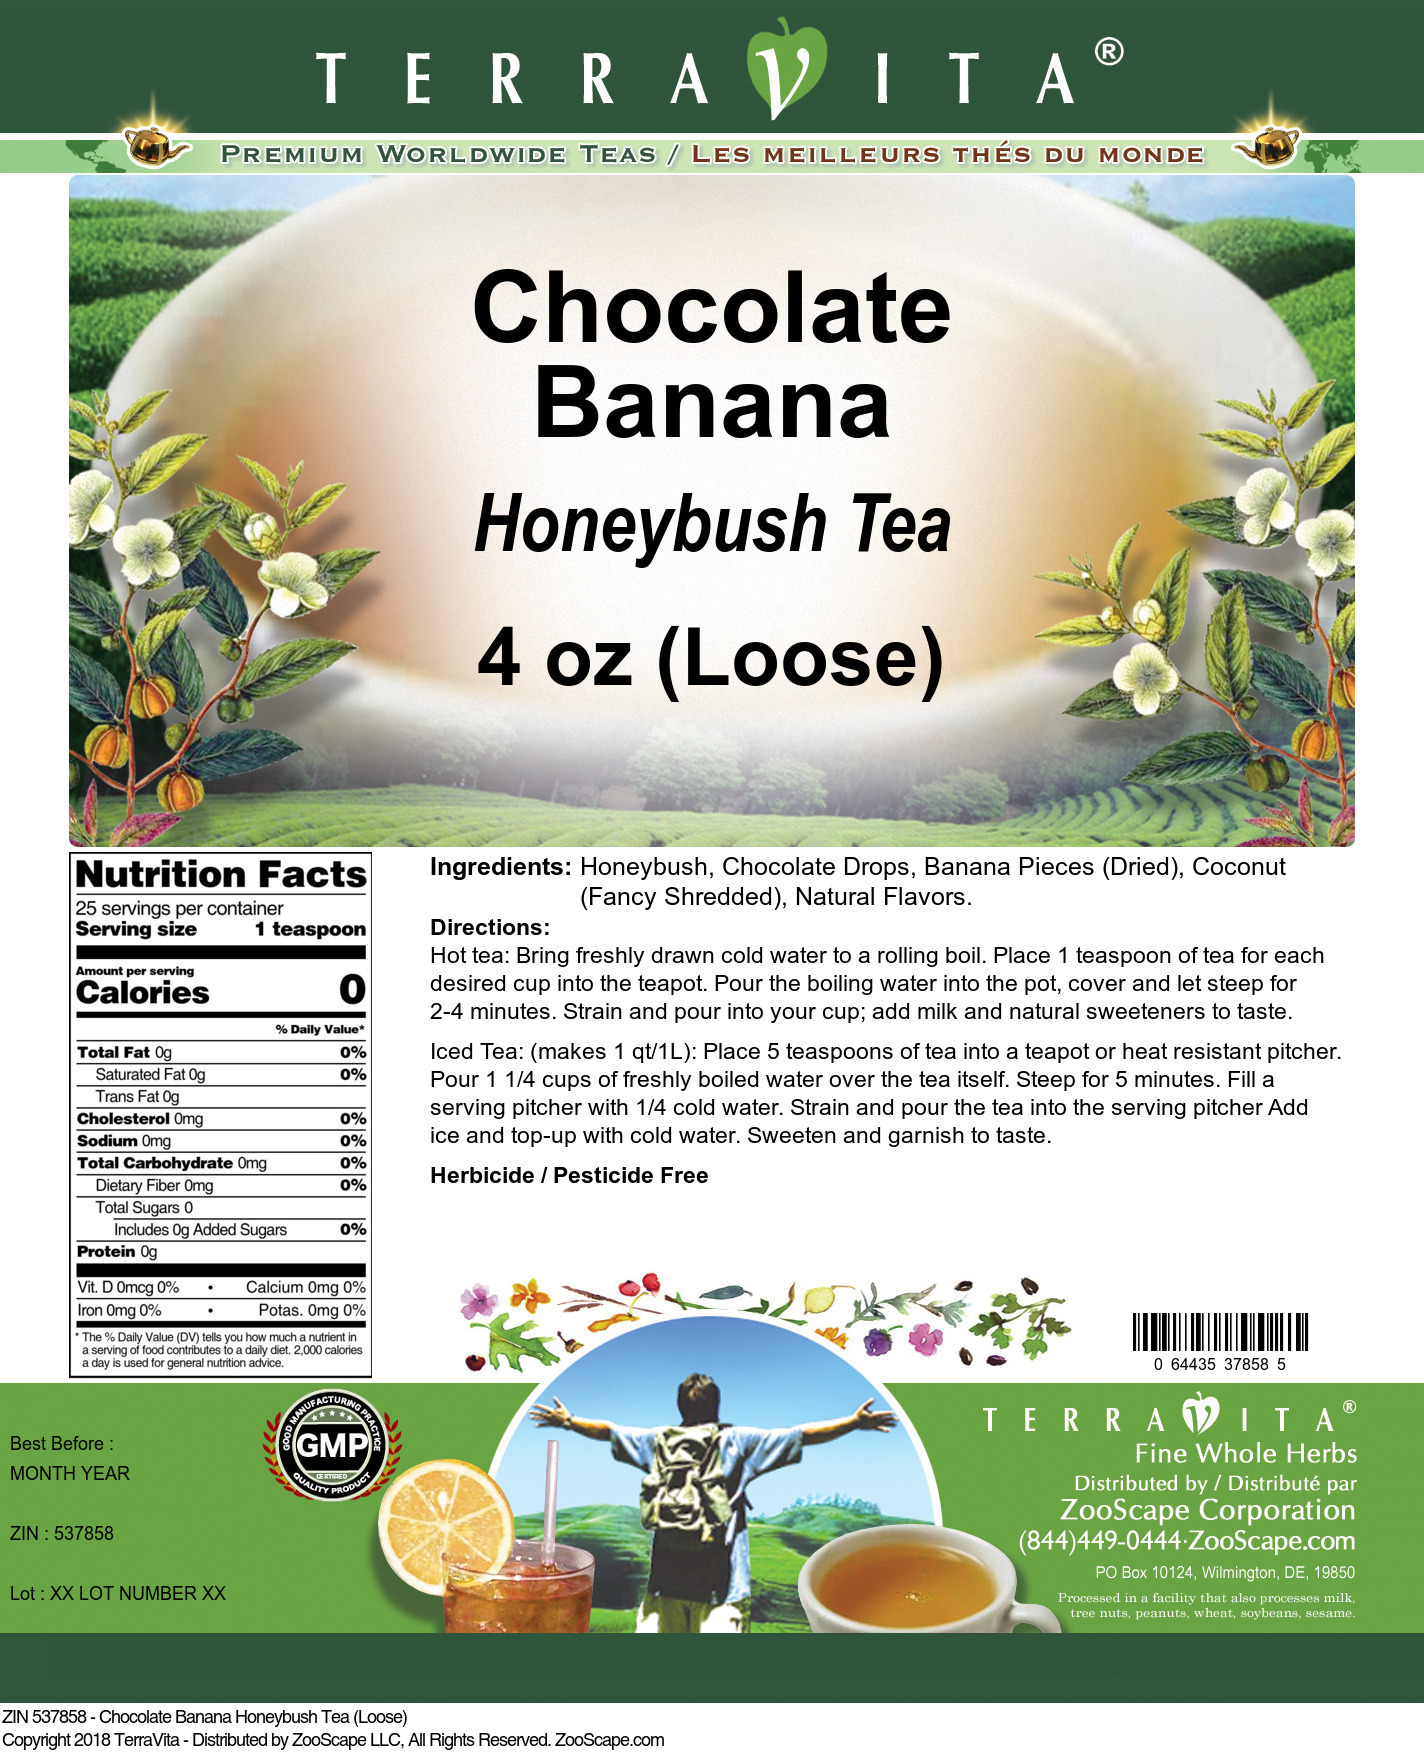 Chocolate Banana Honeybush Tea (Loose) - Label